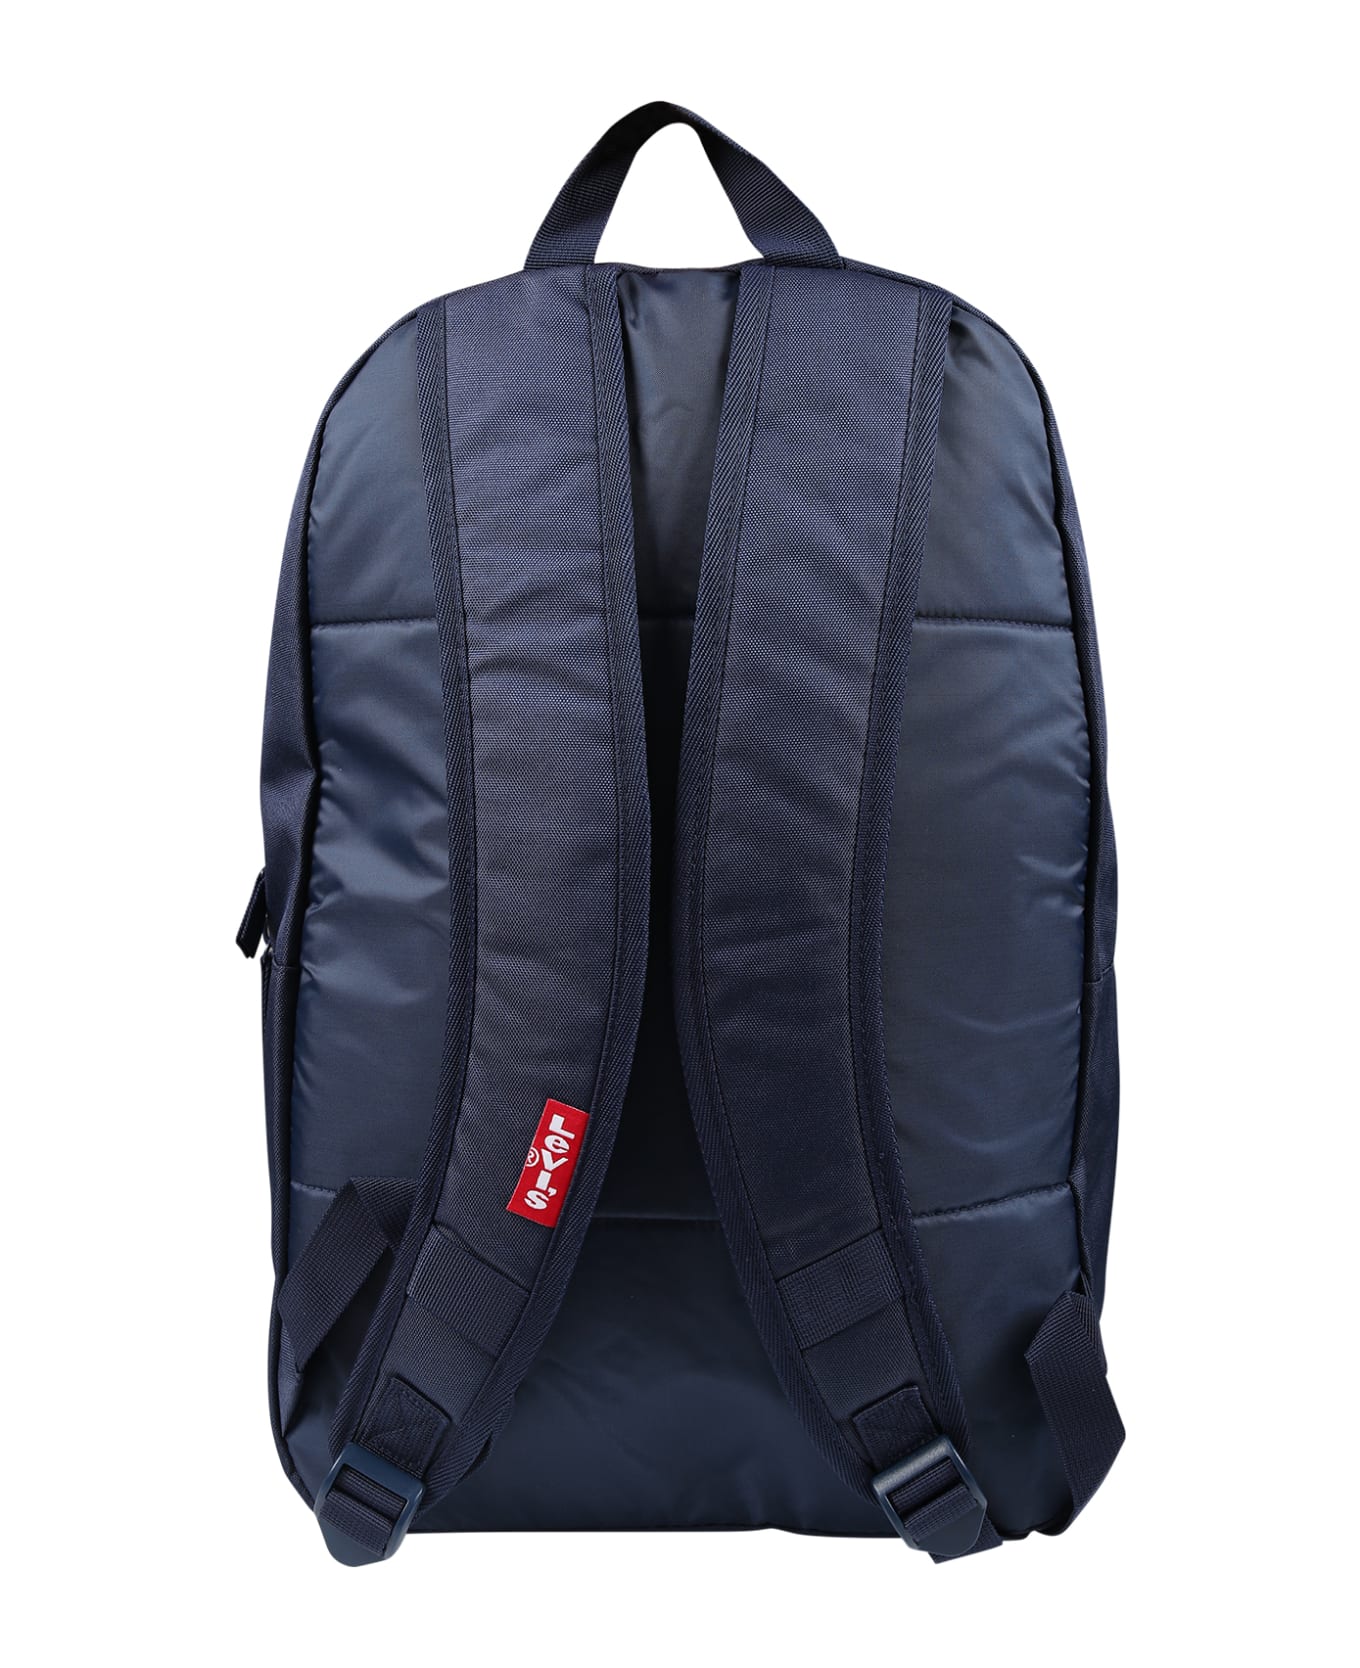 Levi's Blue Backpack For Kids - Blue アクセサリー＆ギフト